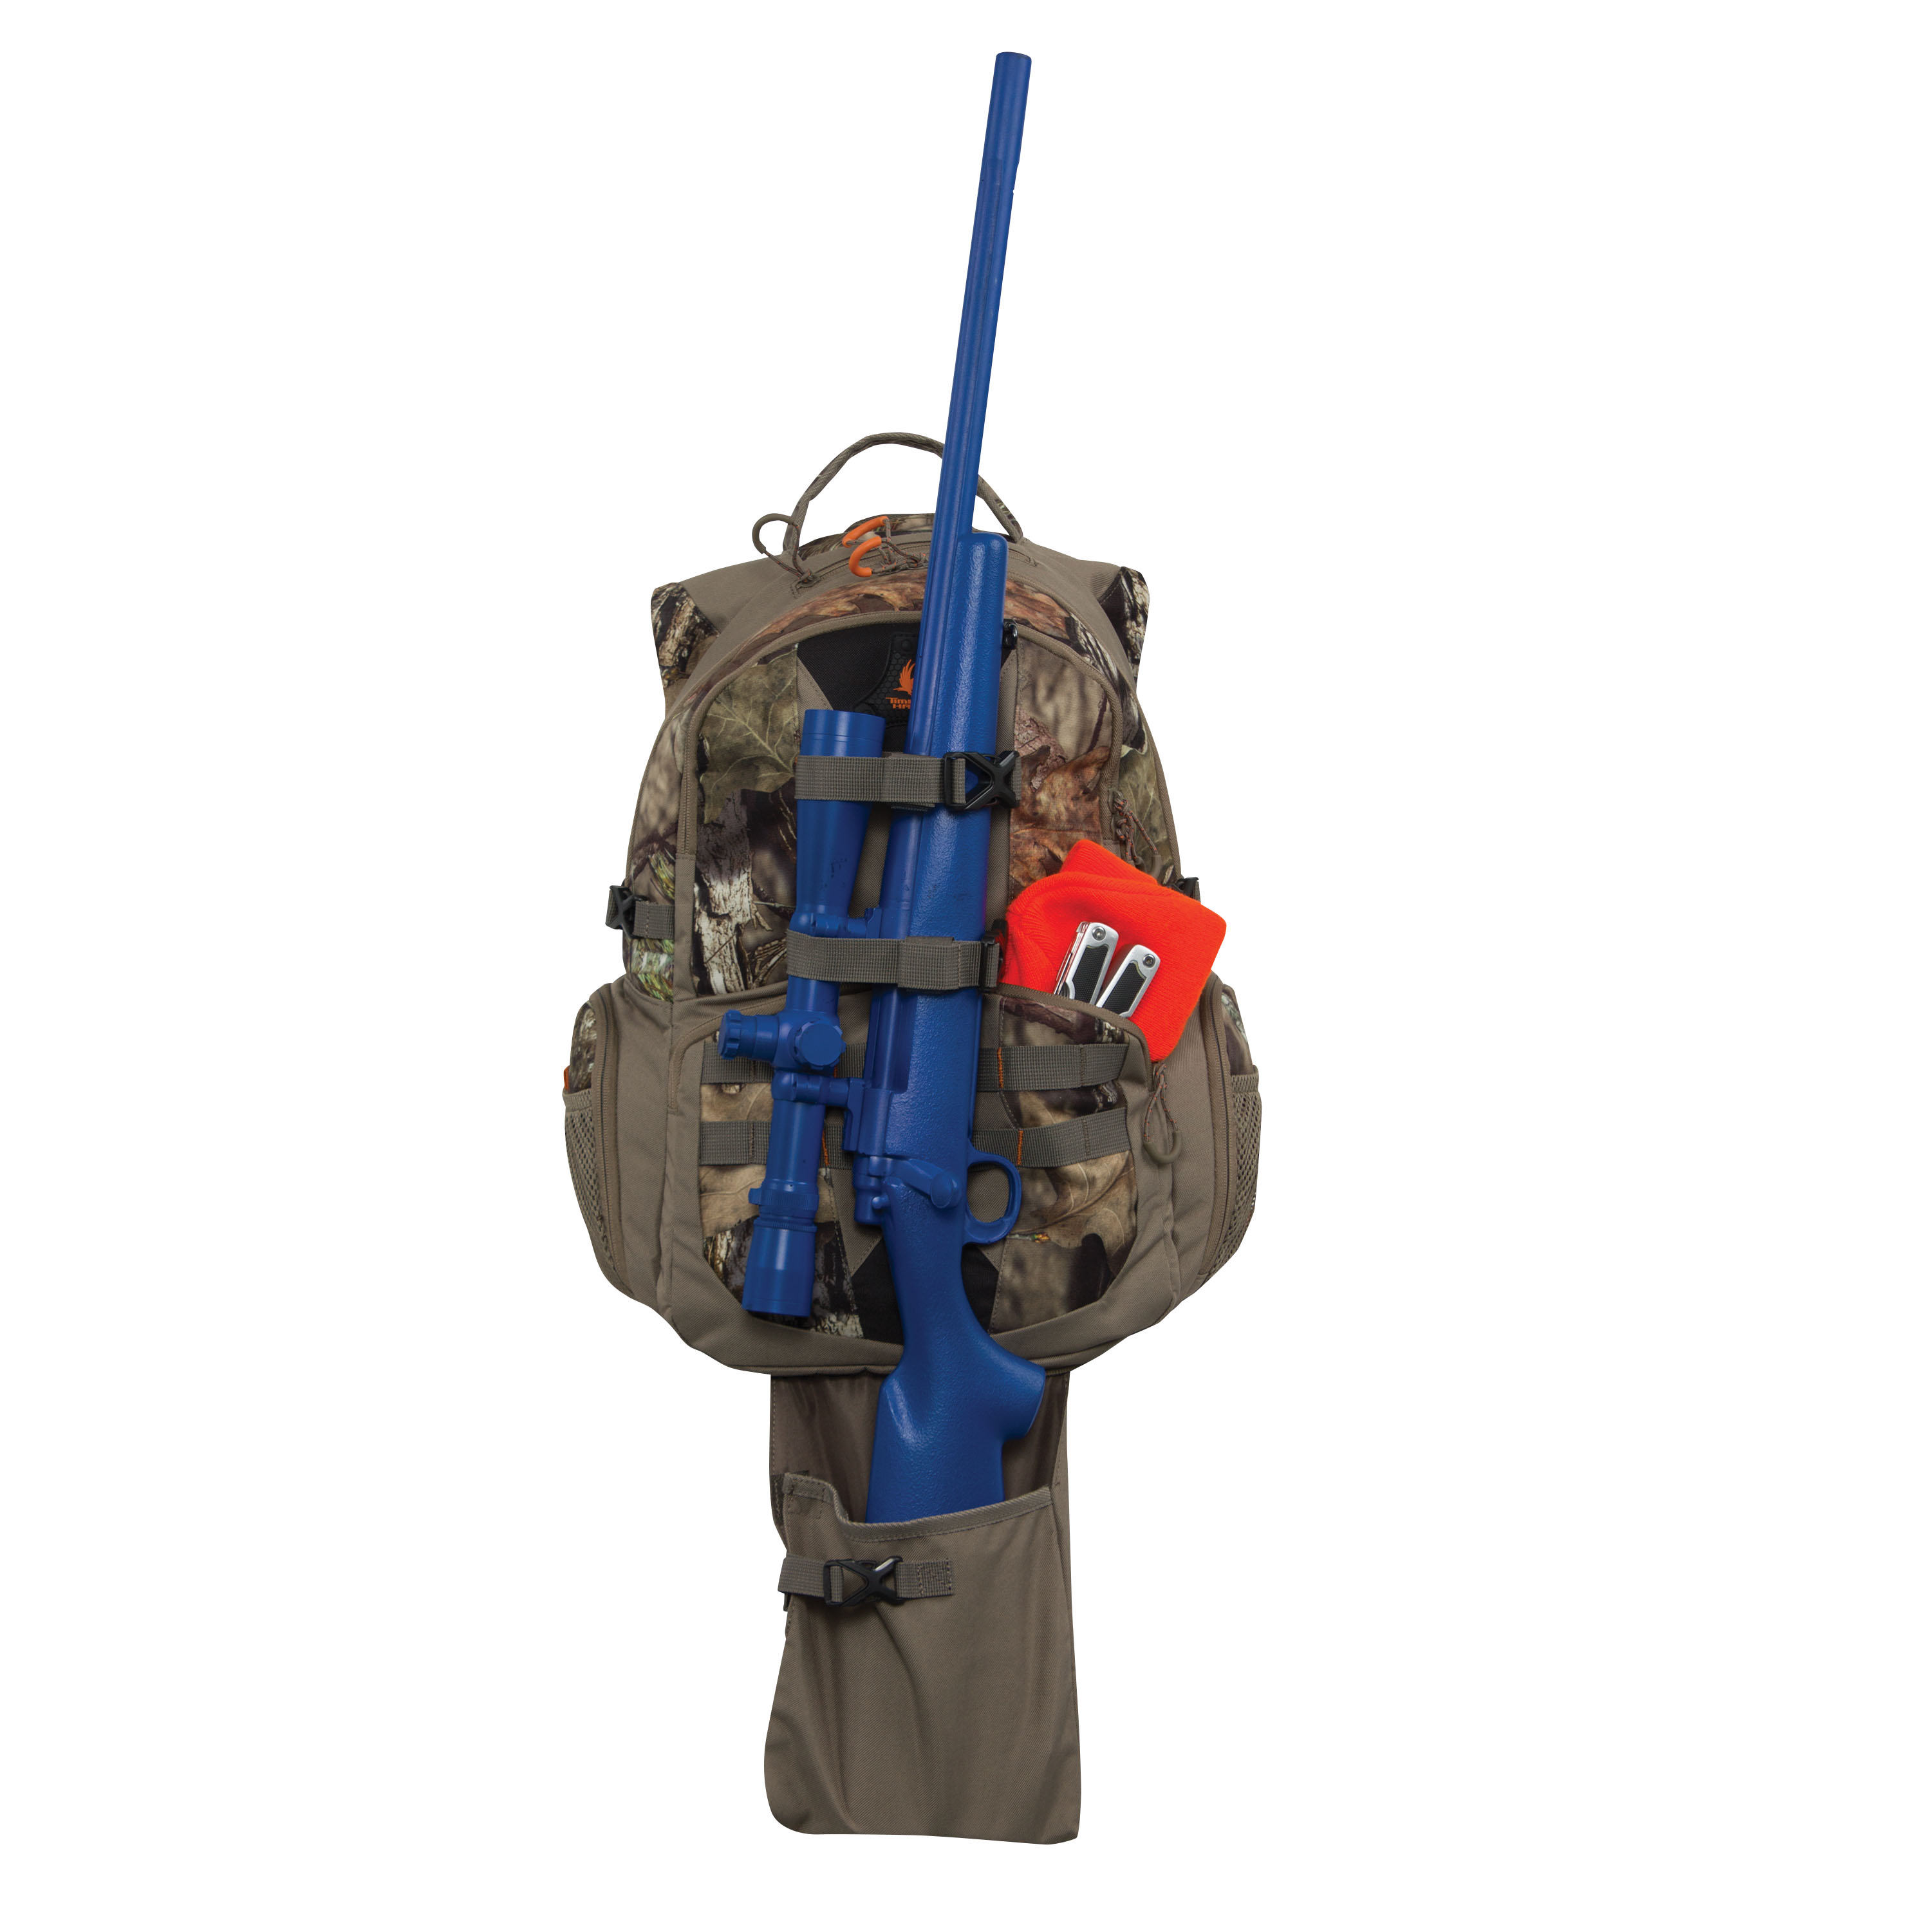 Timberhawk Kodiak 29 L Hunting Backpack, Realtree Xtra Camouflage, Unisex, Green - image 4 of 6